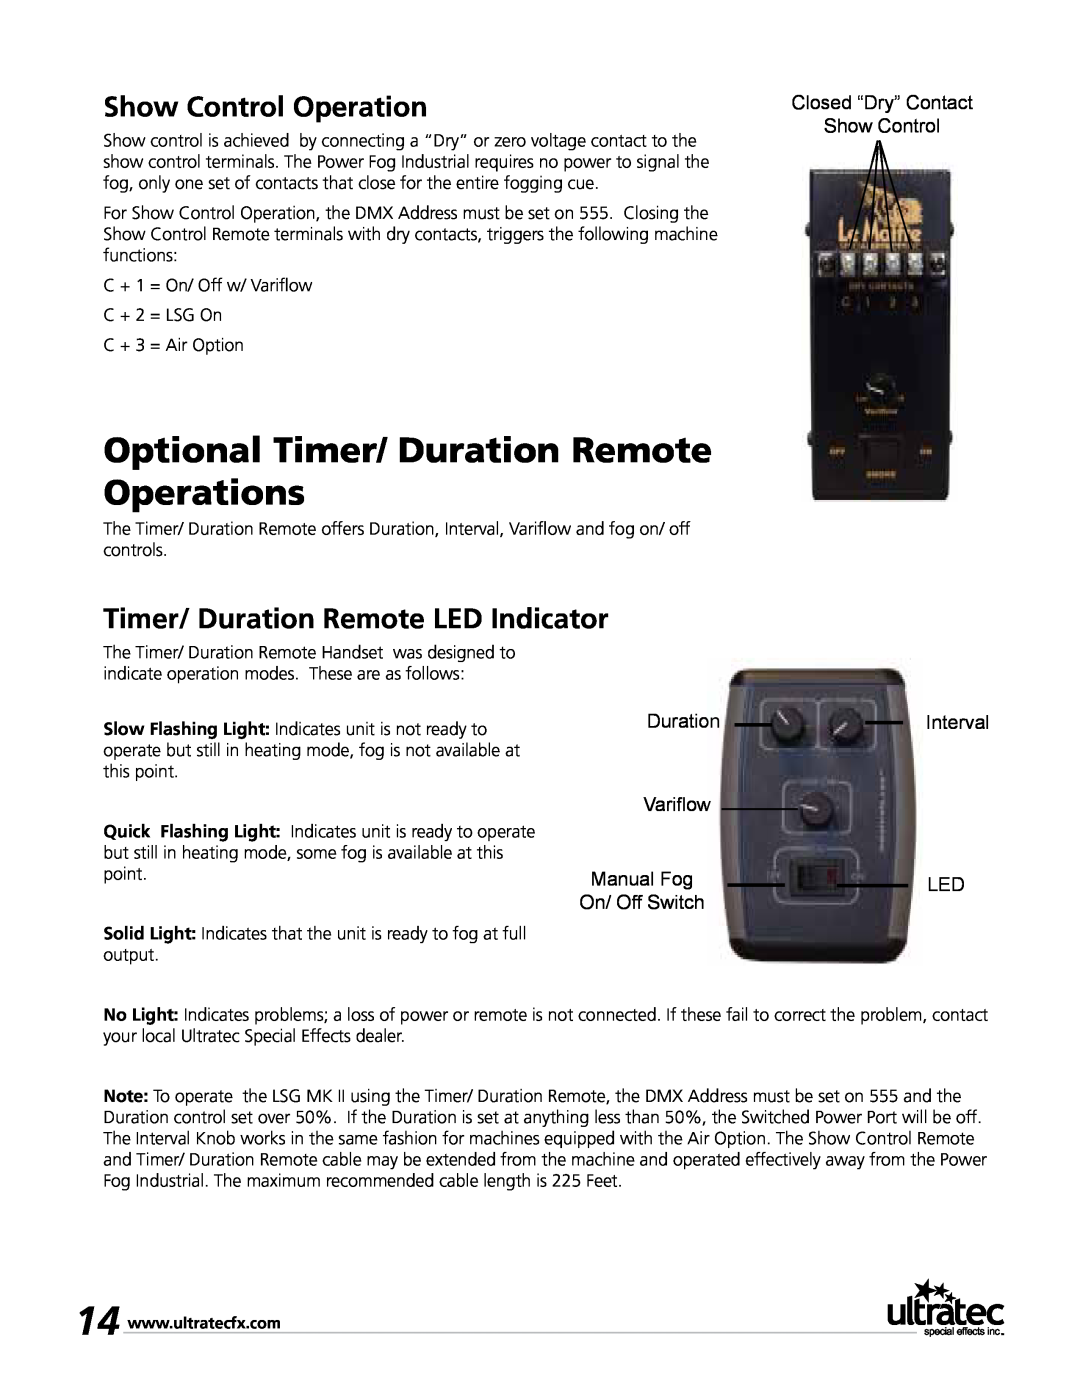 Ultratec PFI-9D Optional Timer/ Duration Remote Operations, Show Control Operation, Timer/ Duration Remote LED Indicator 